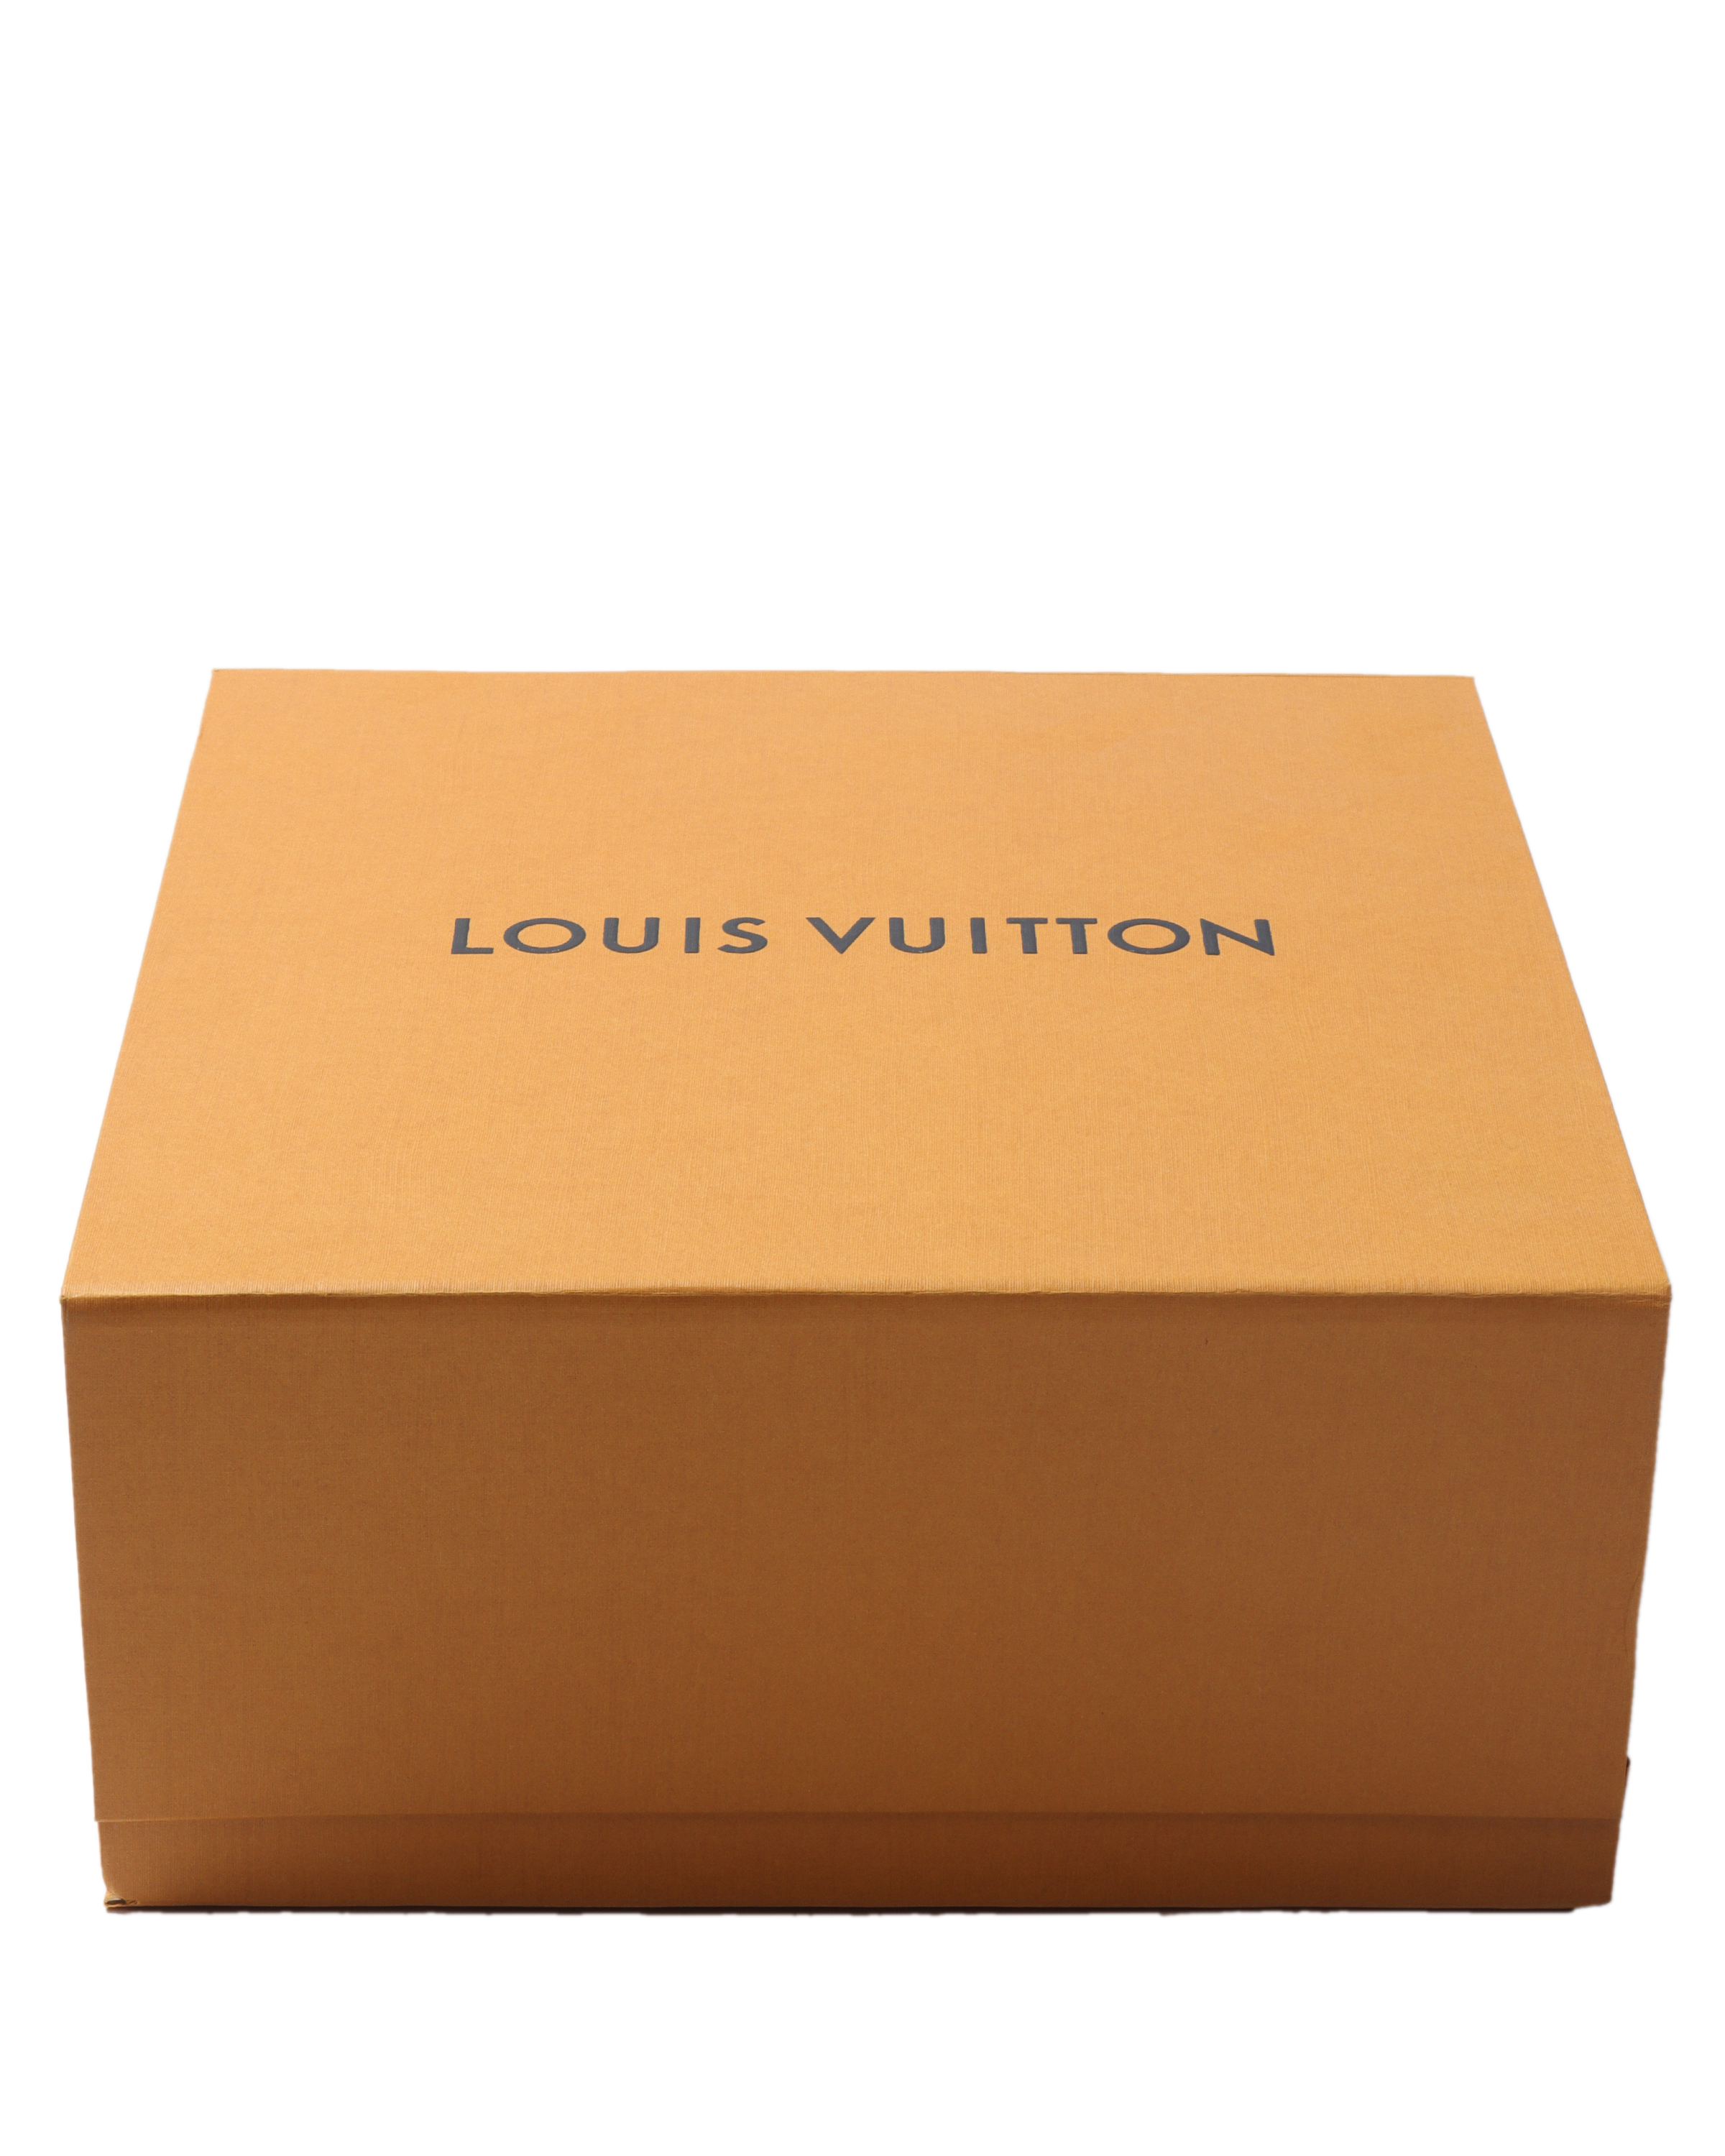 LOUIS VUITTON - Music Box Vivienne 